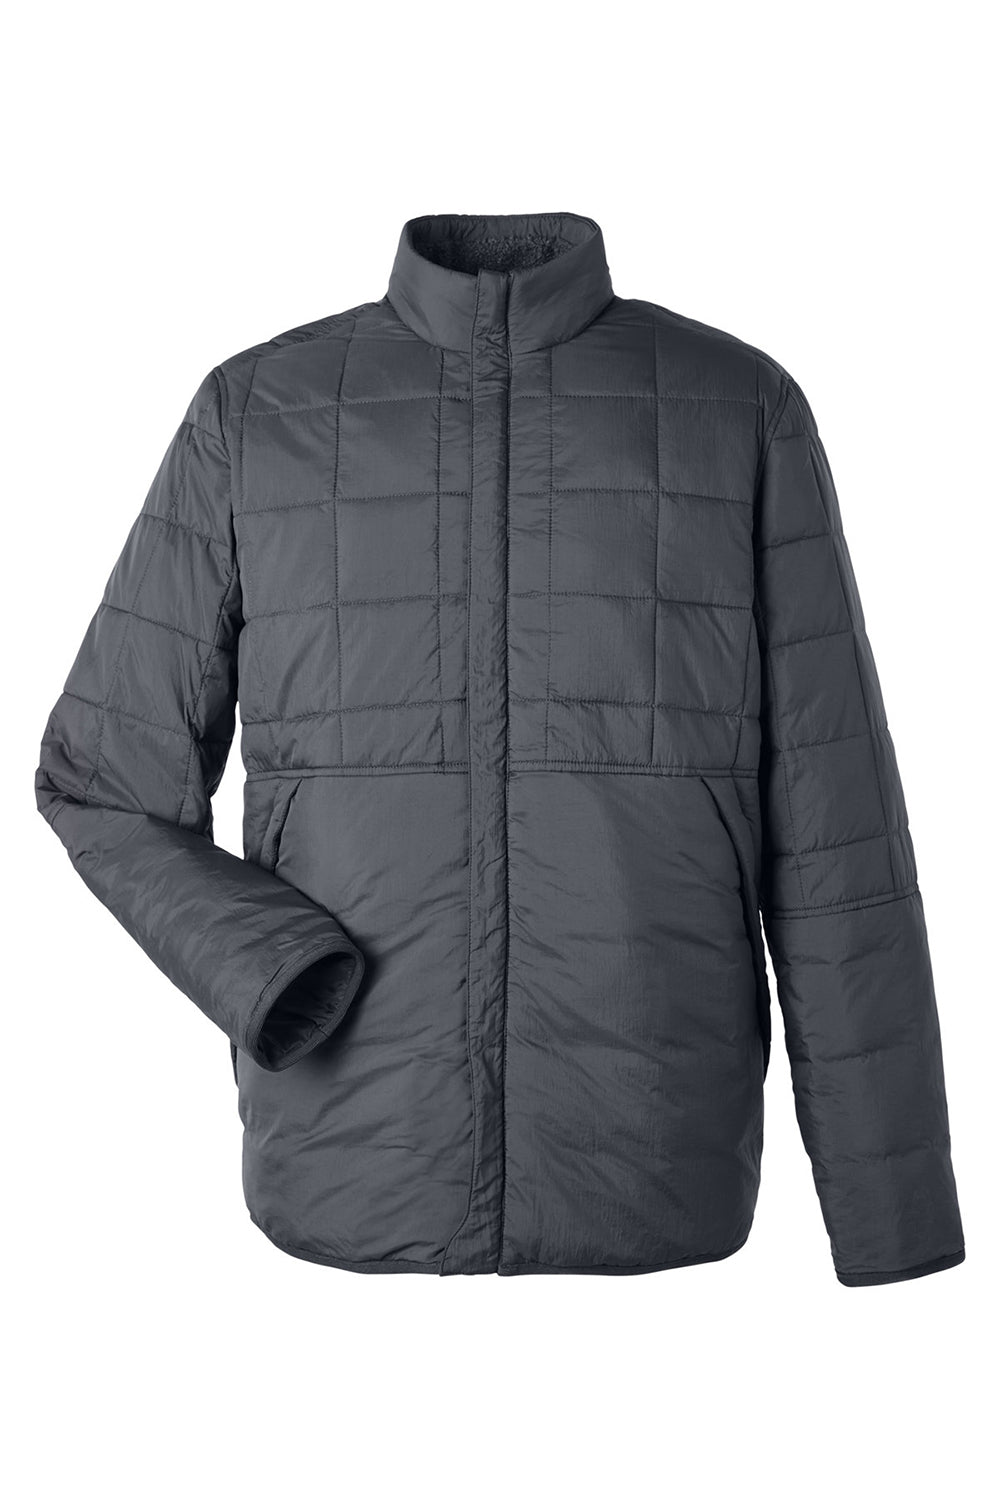 North End NE721 Mens Aura Fleece Lined Full Zip Jacket Carbon Grey Flat Front